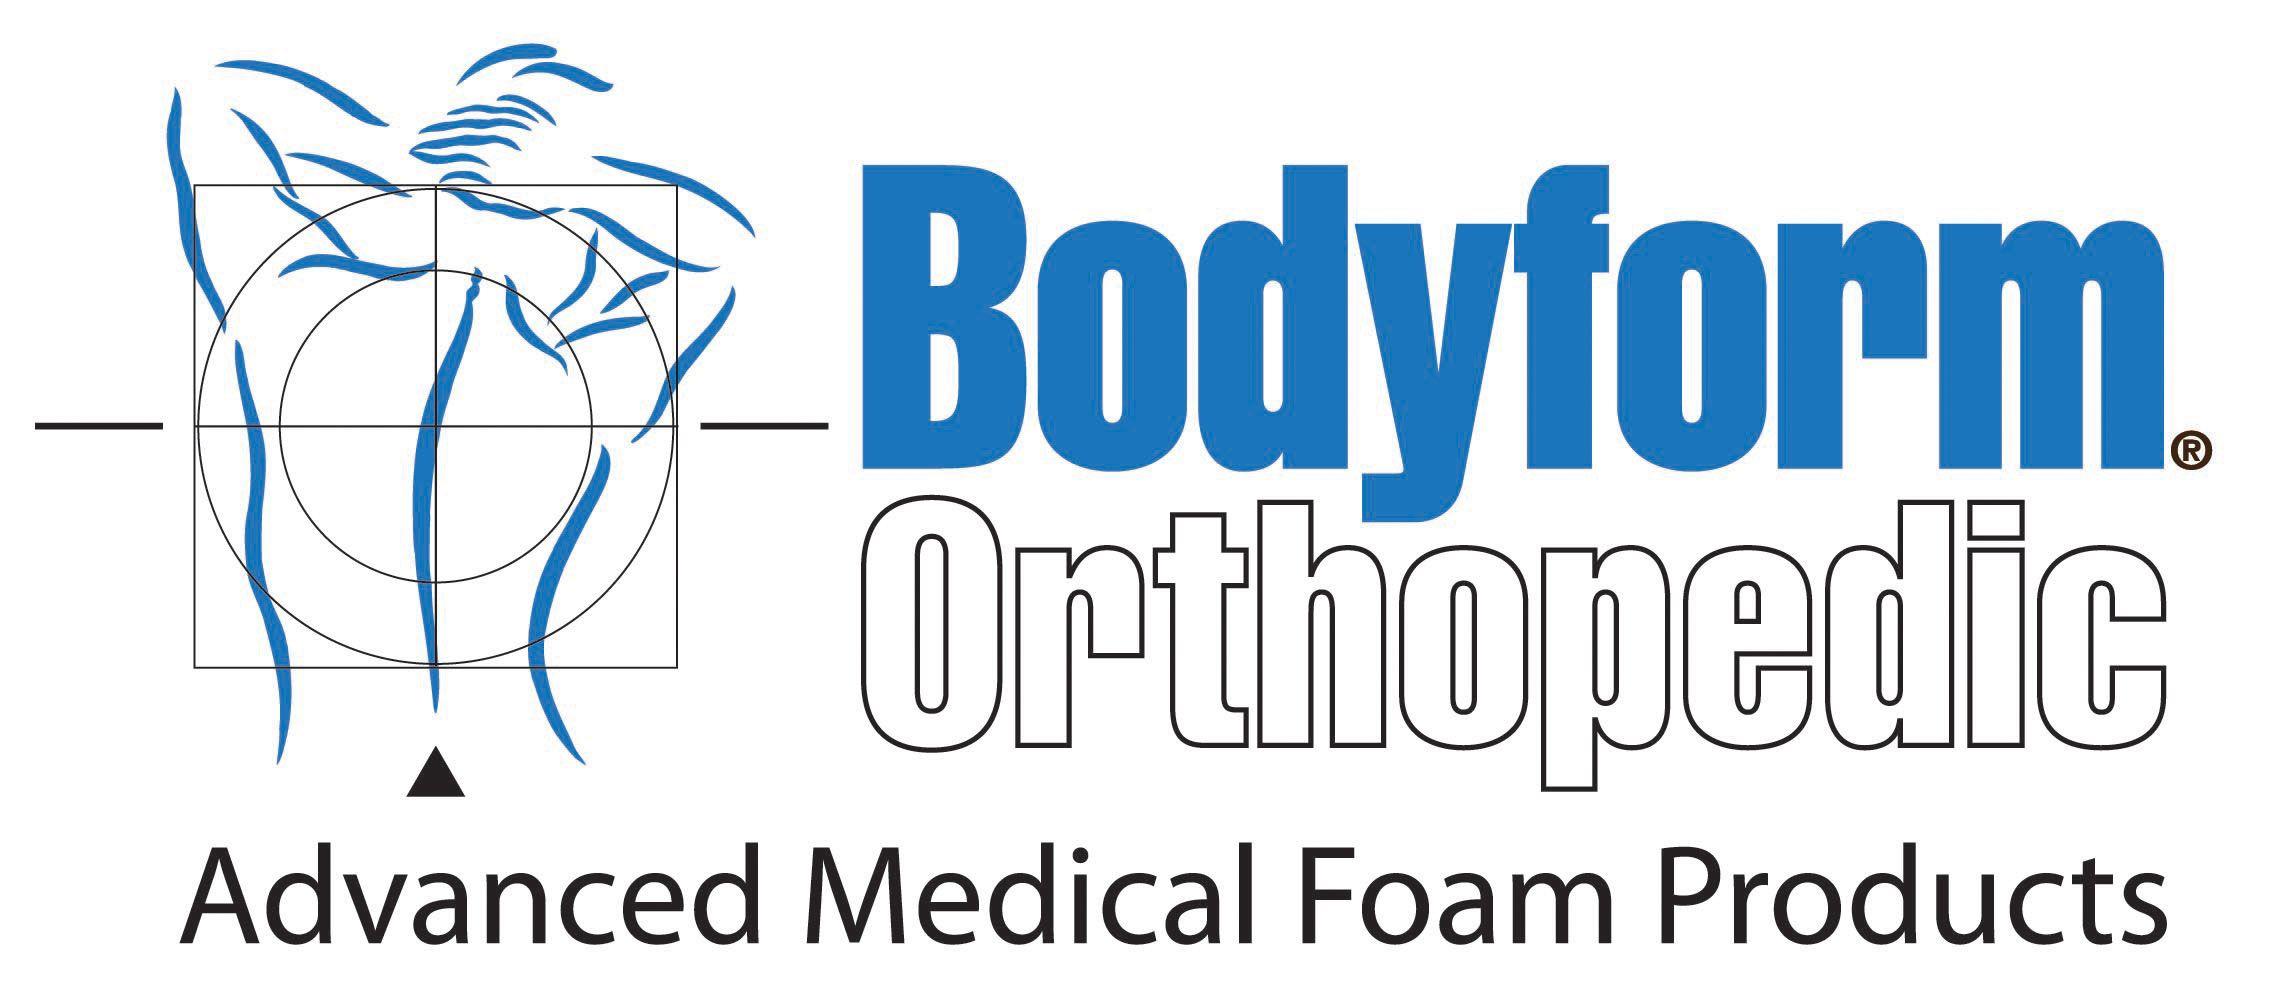 Orthopedic Logo - Bodyform Orthopedic Logo